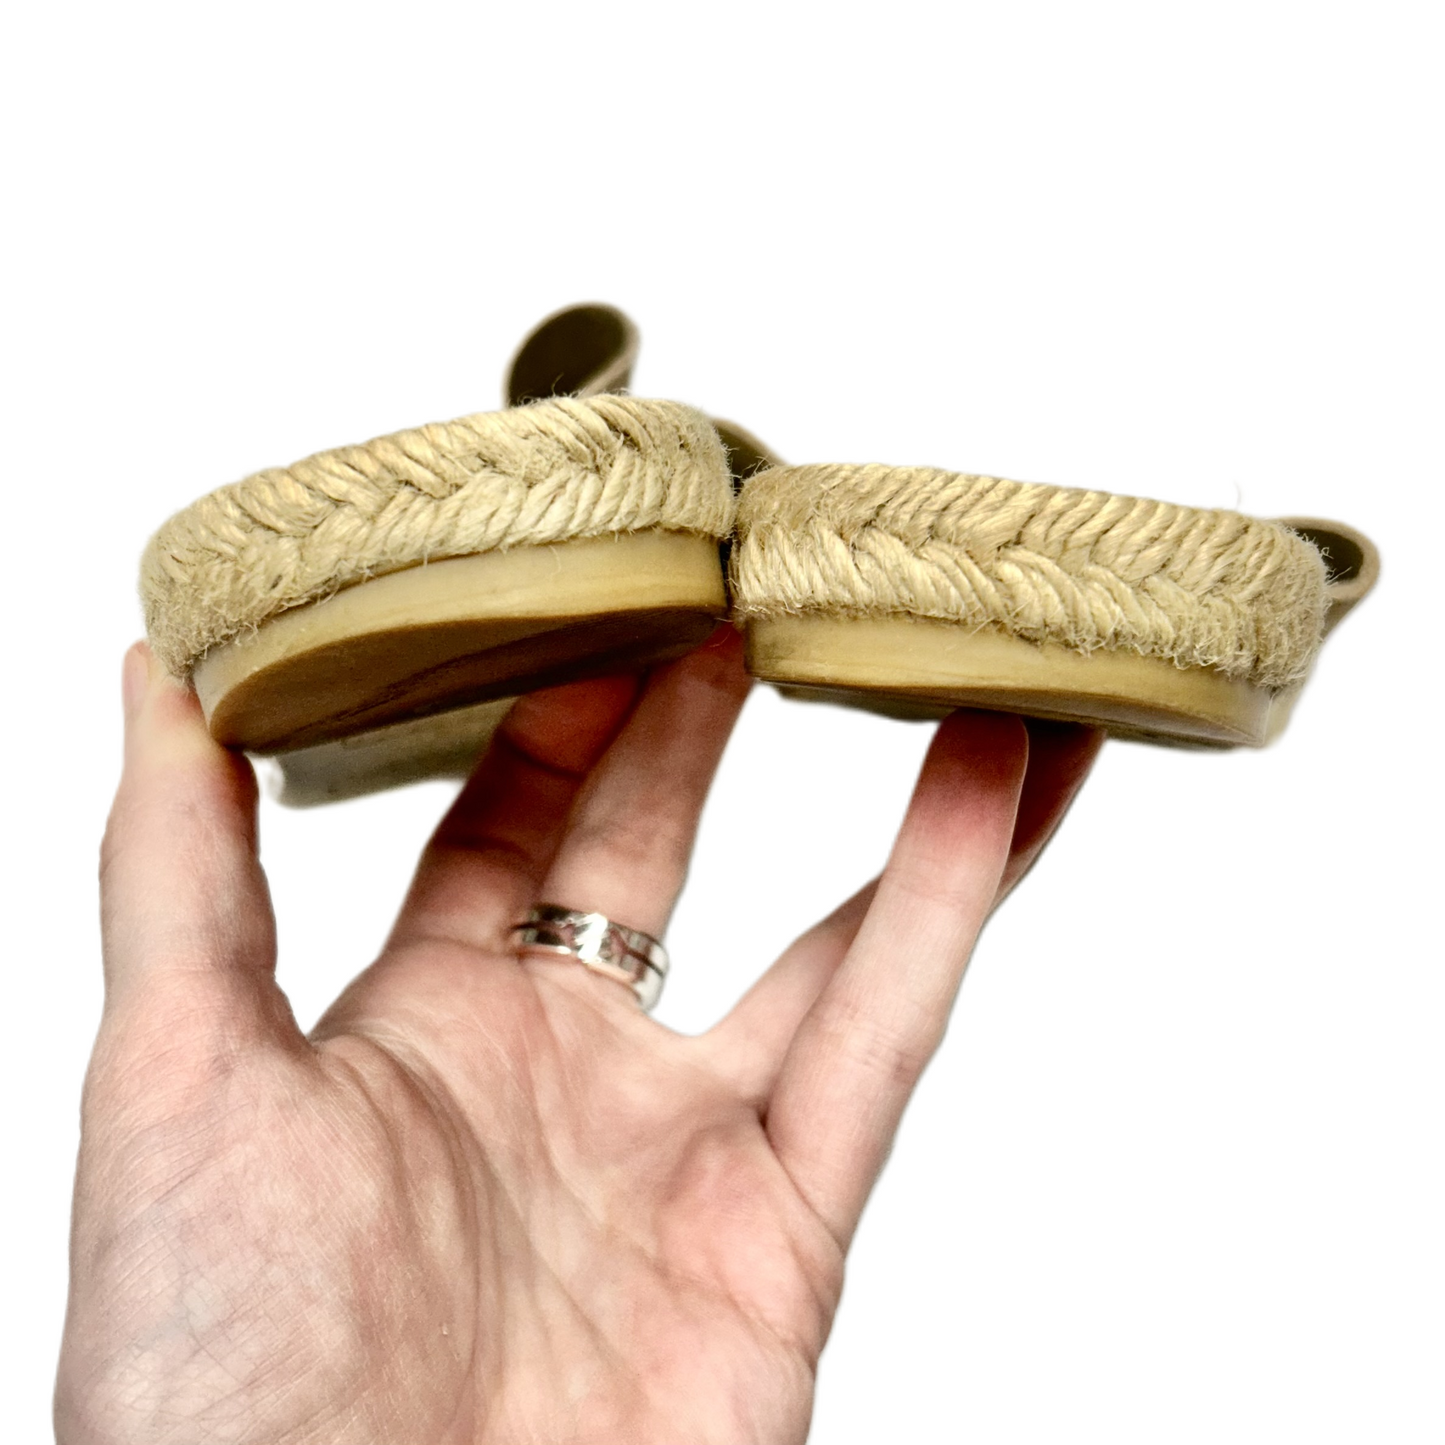 Tan Sandals Designer By Maypol, Size: 8